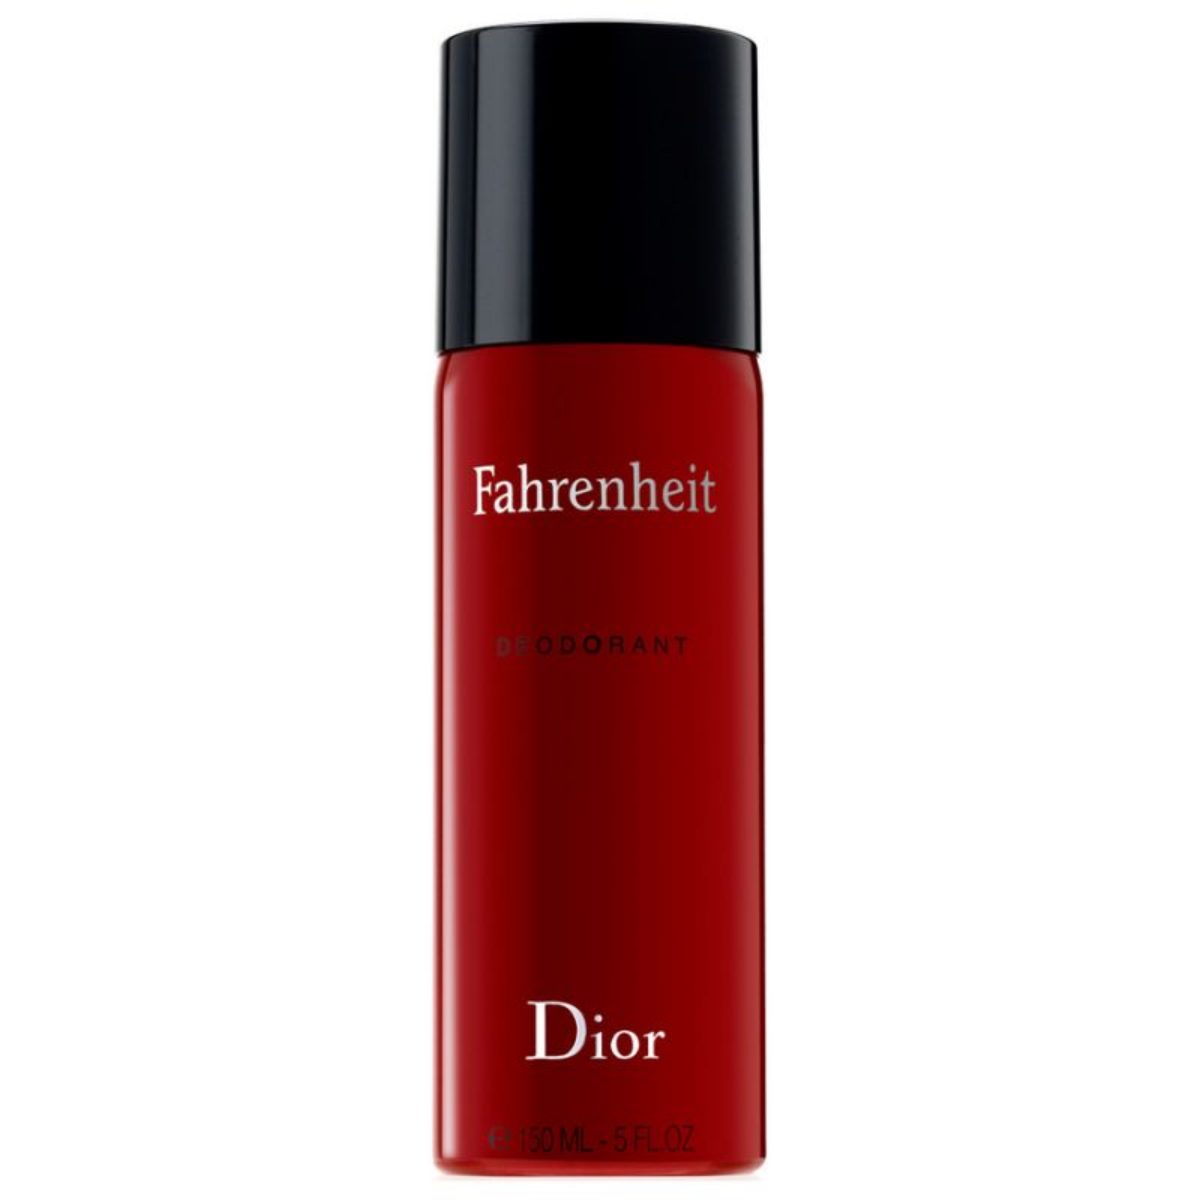 Image of Dior Fahrenheit - Deospray 150 ml